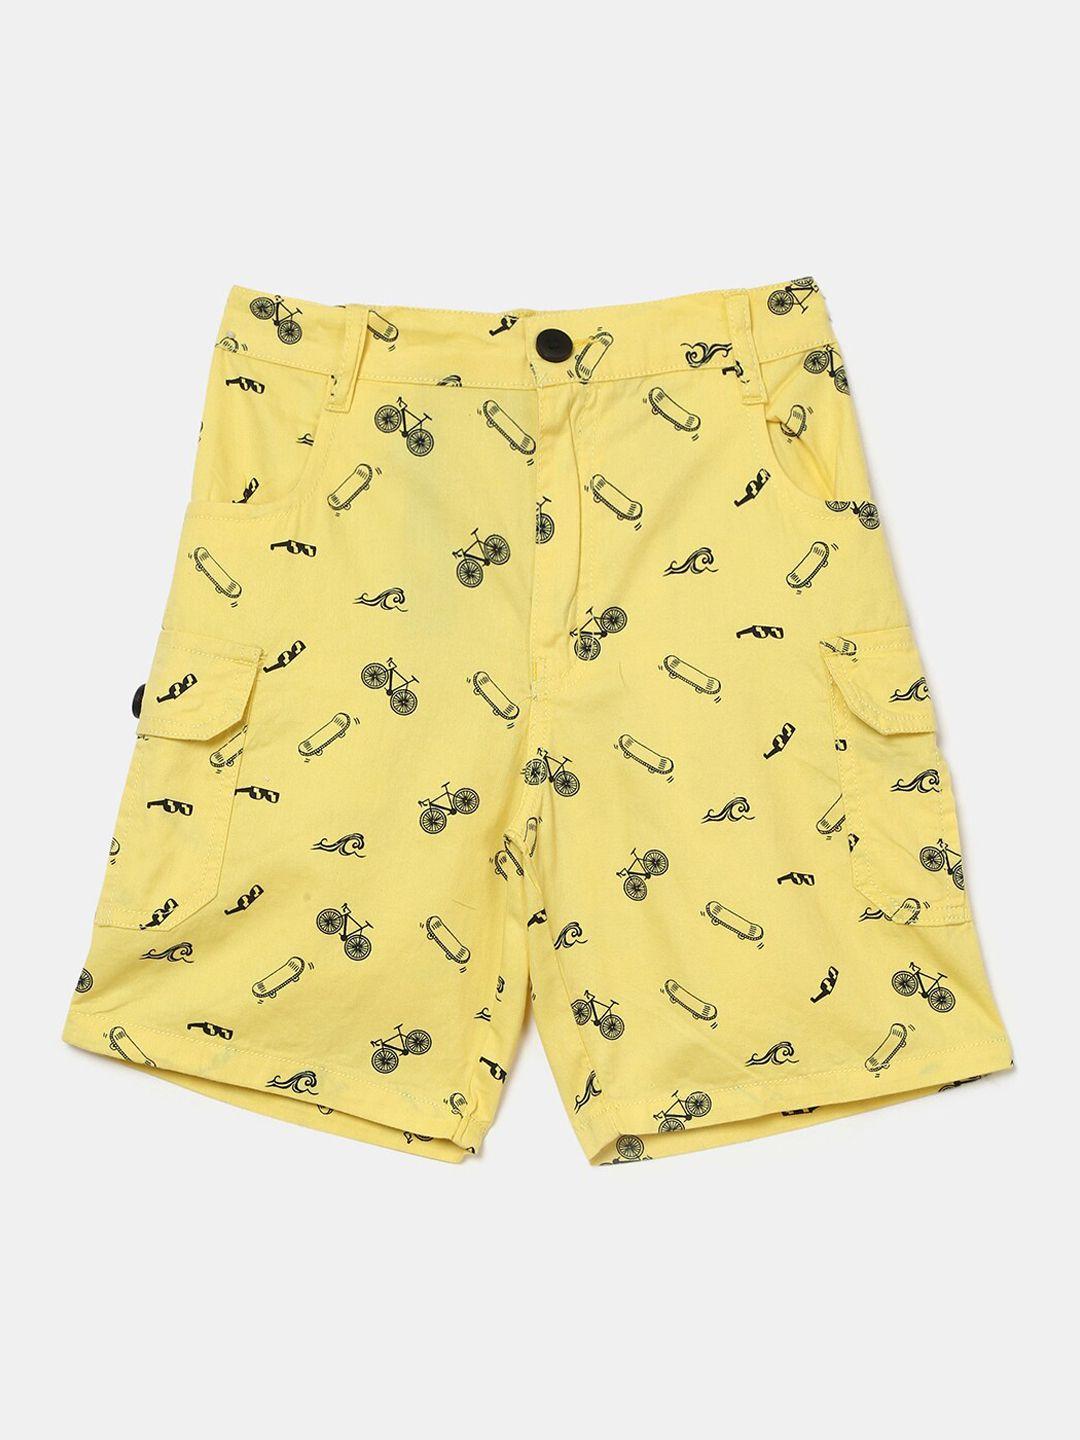 v-mart boys yellow conversational printed cotton shorts